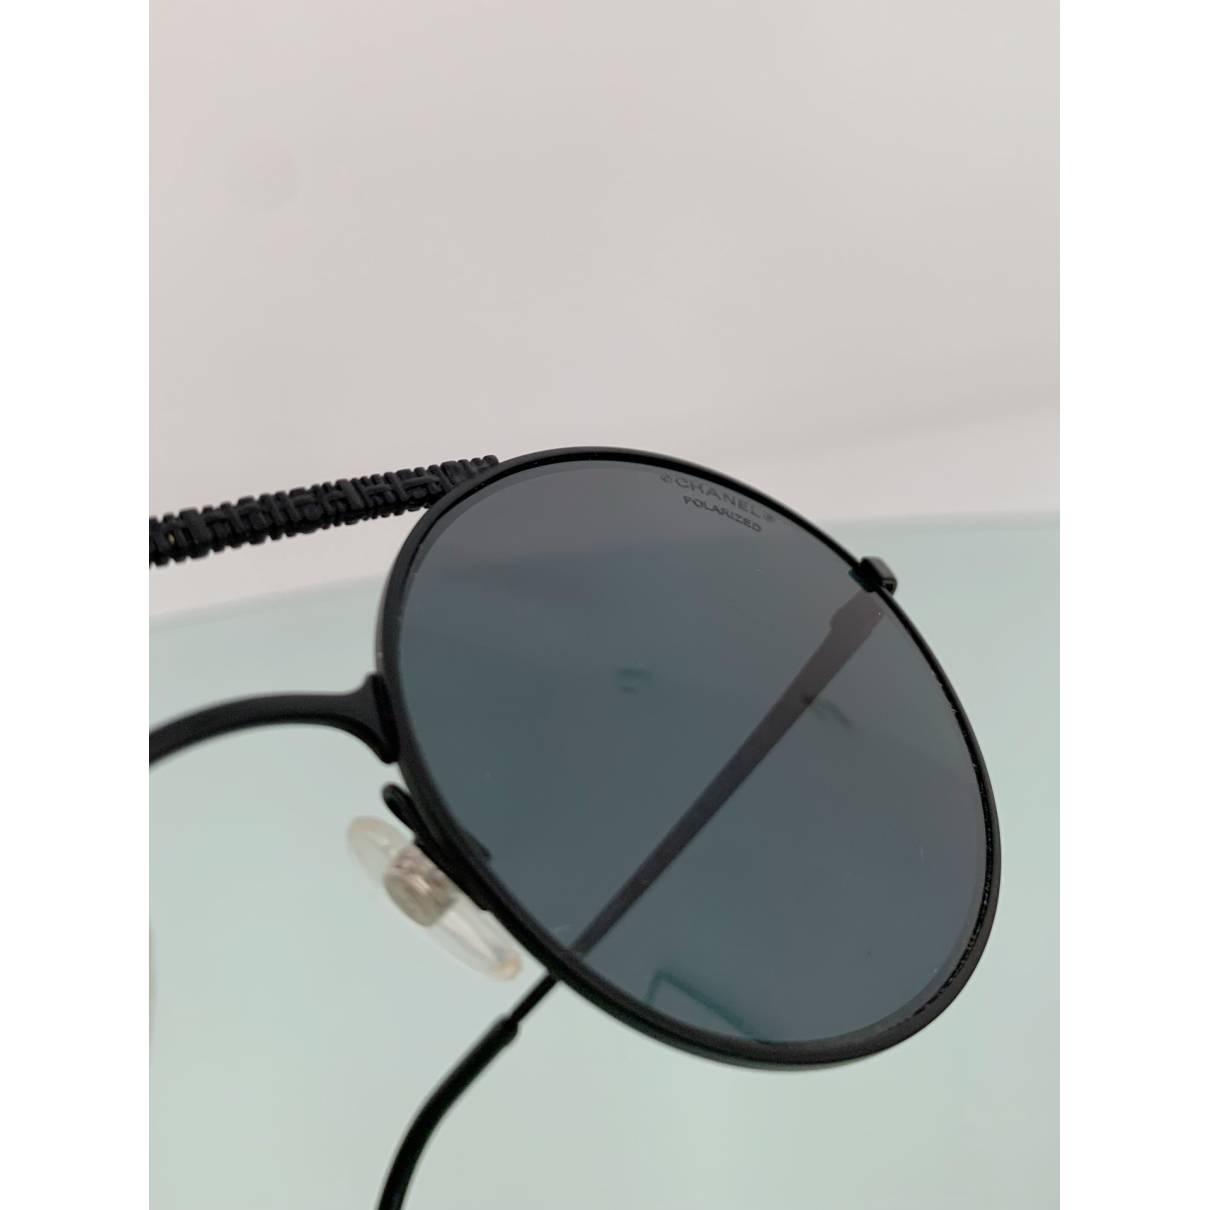 Chanel Round Frame Aviator Sunglasses in Black